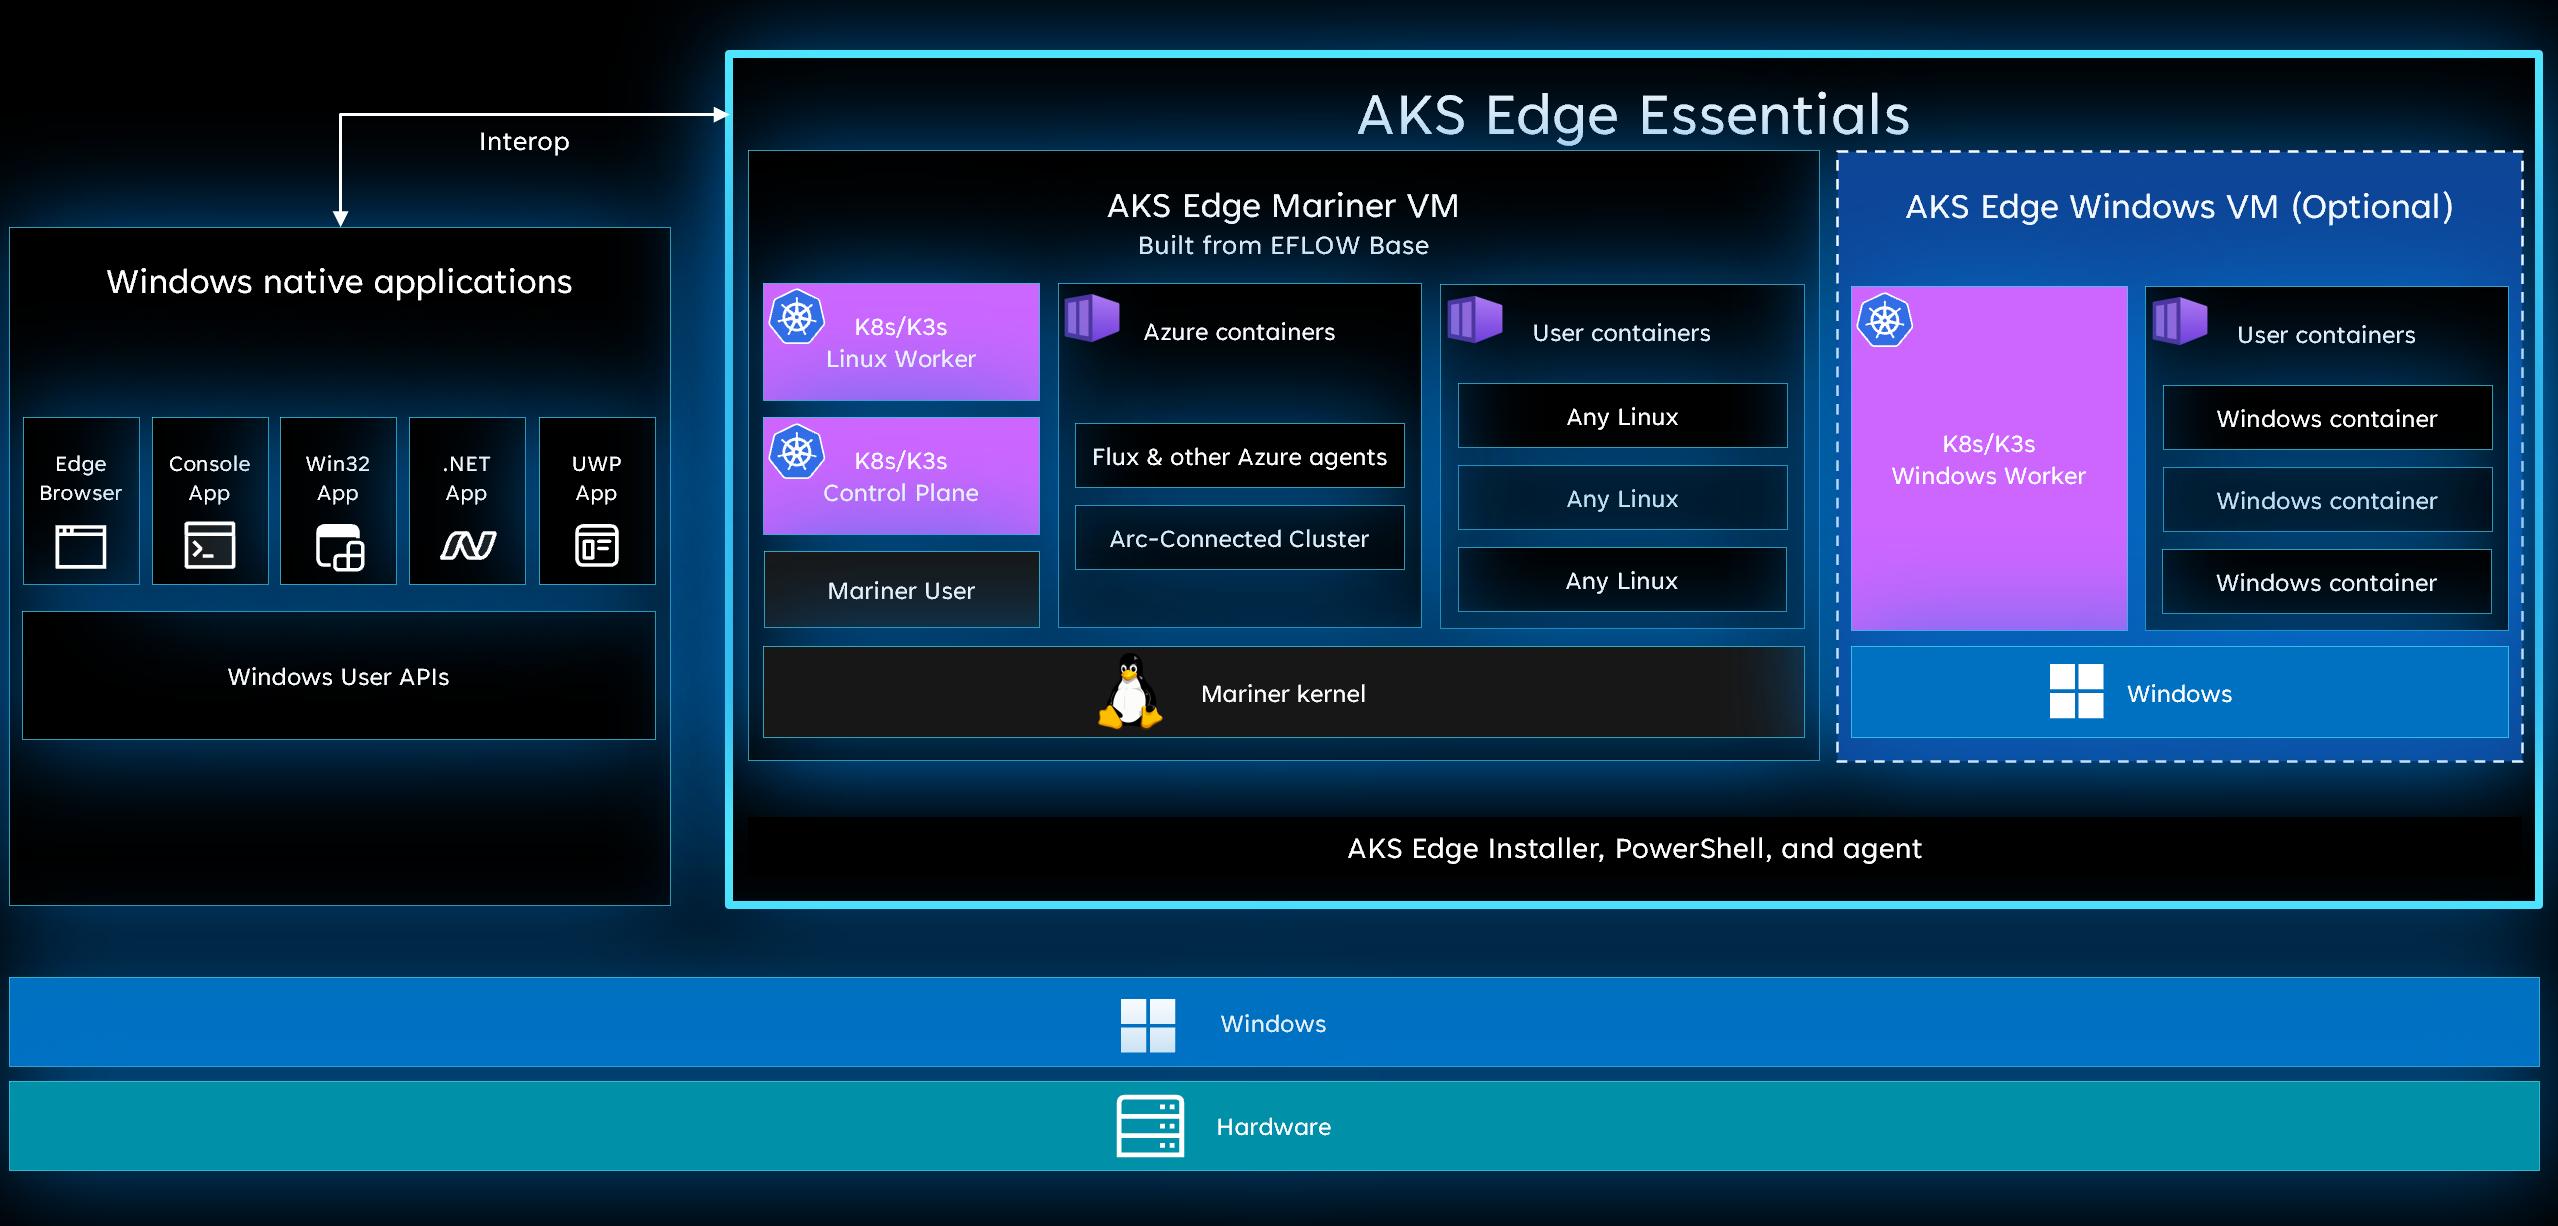 Diagrama da interoperabilidade do AKS Edge Essentials.